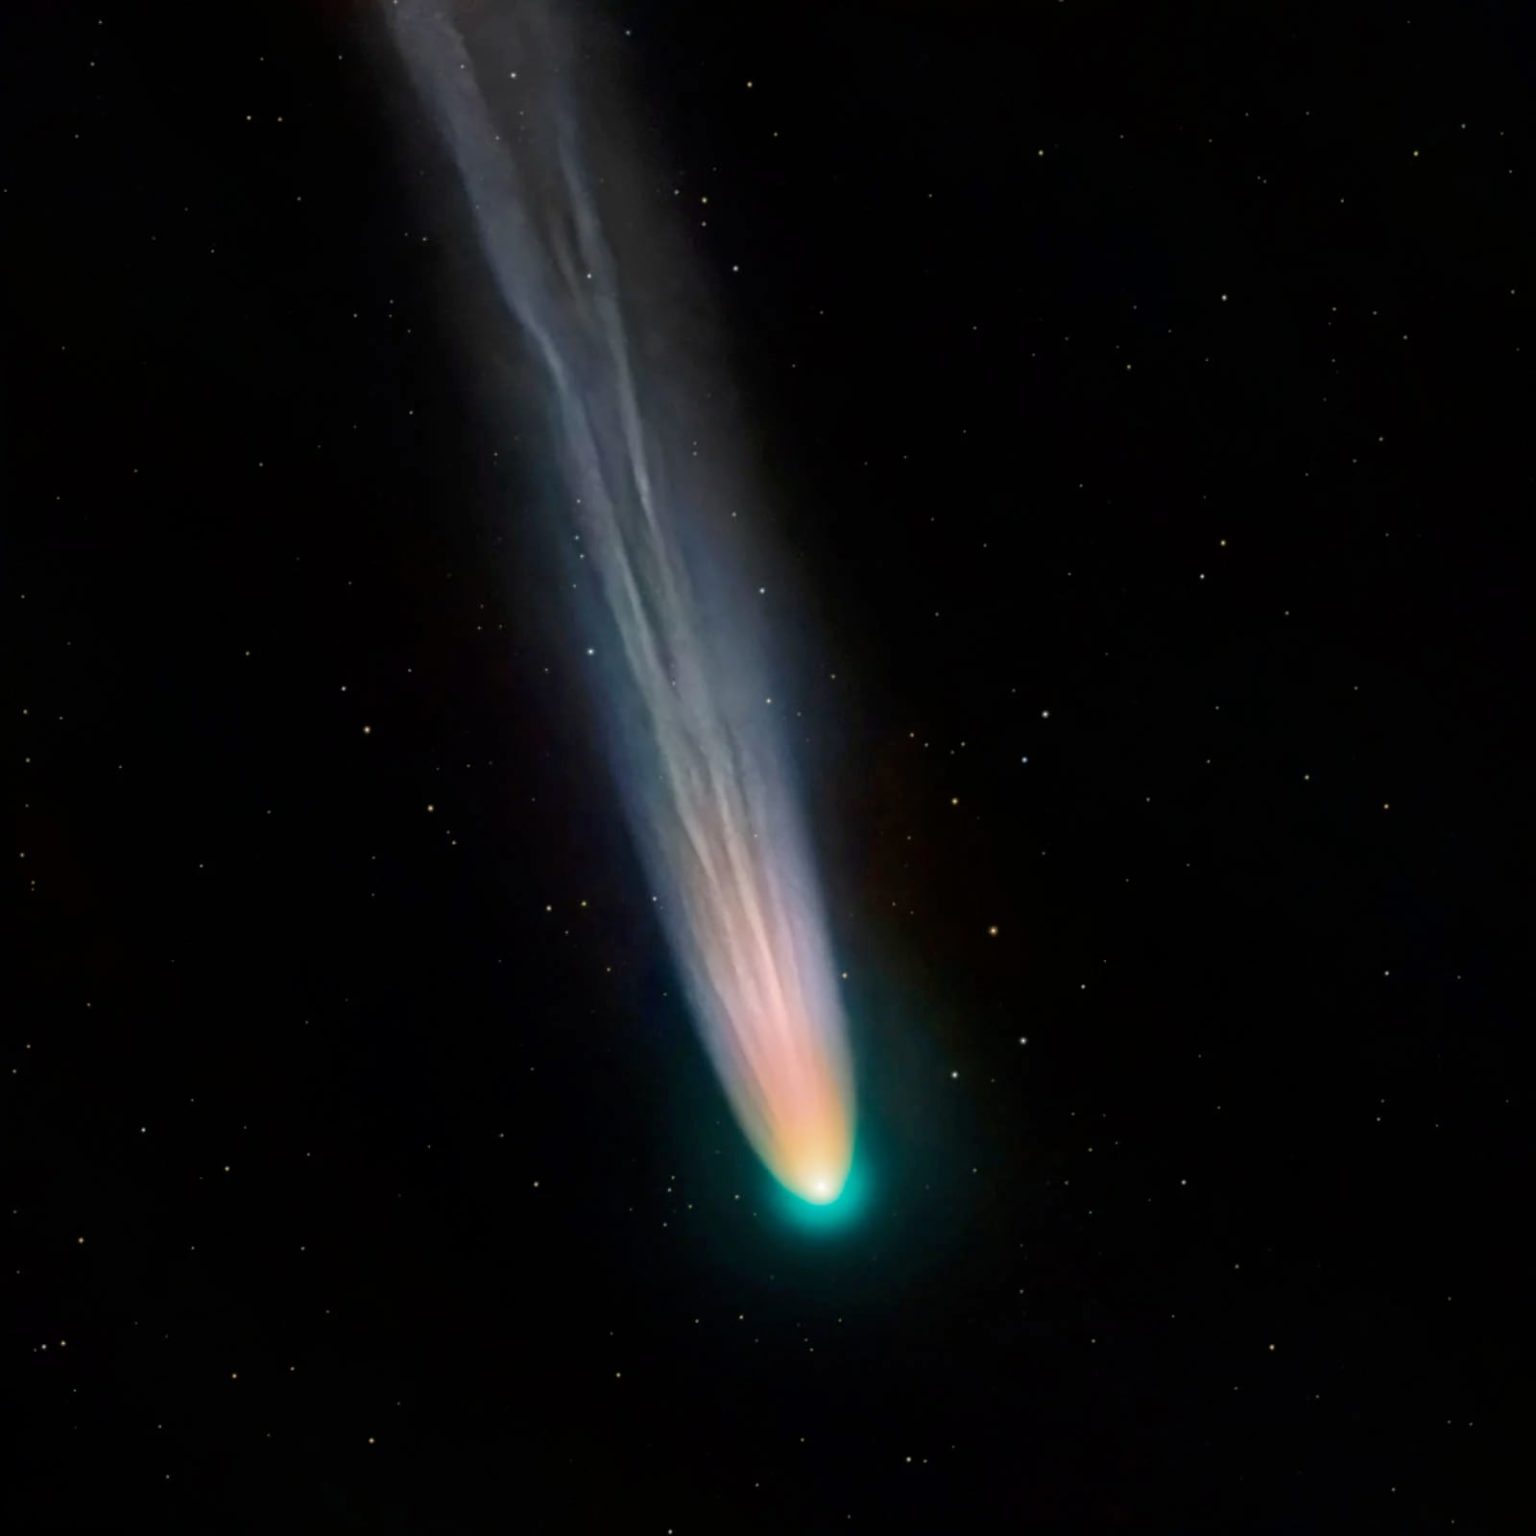 Christmas Comet Magnified Images Show Brilliant Colors Surrounding